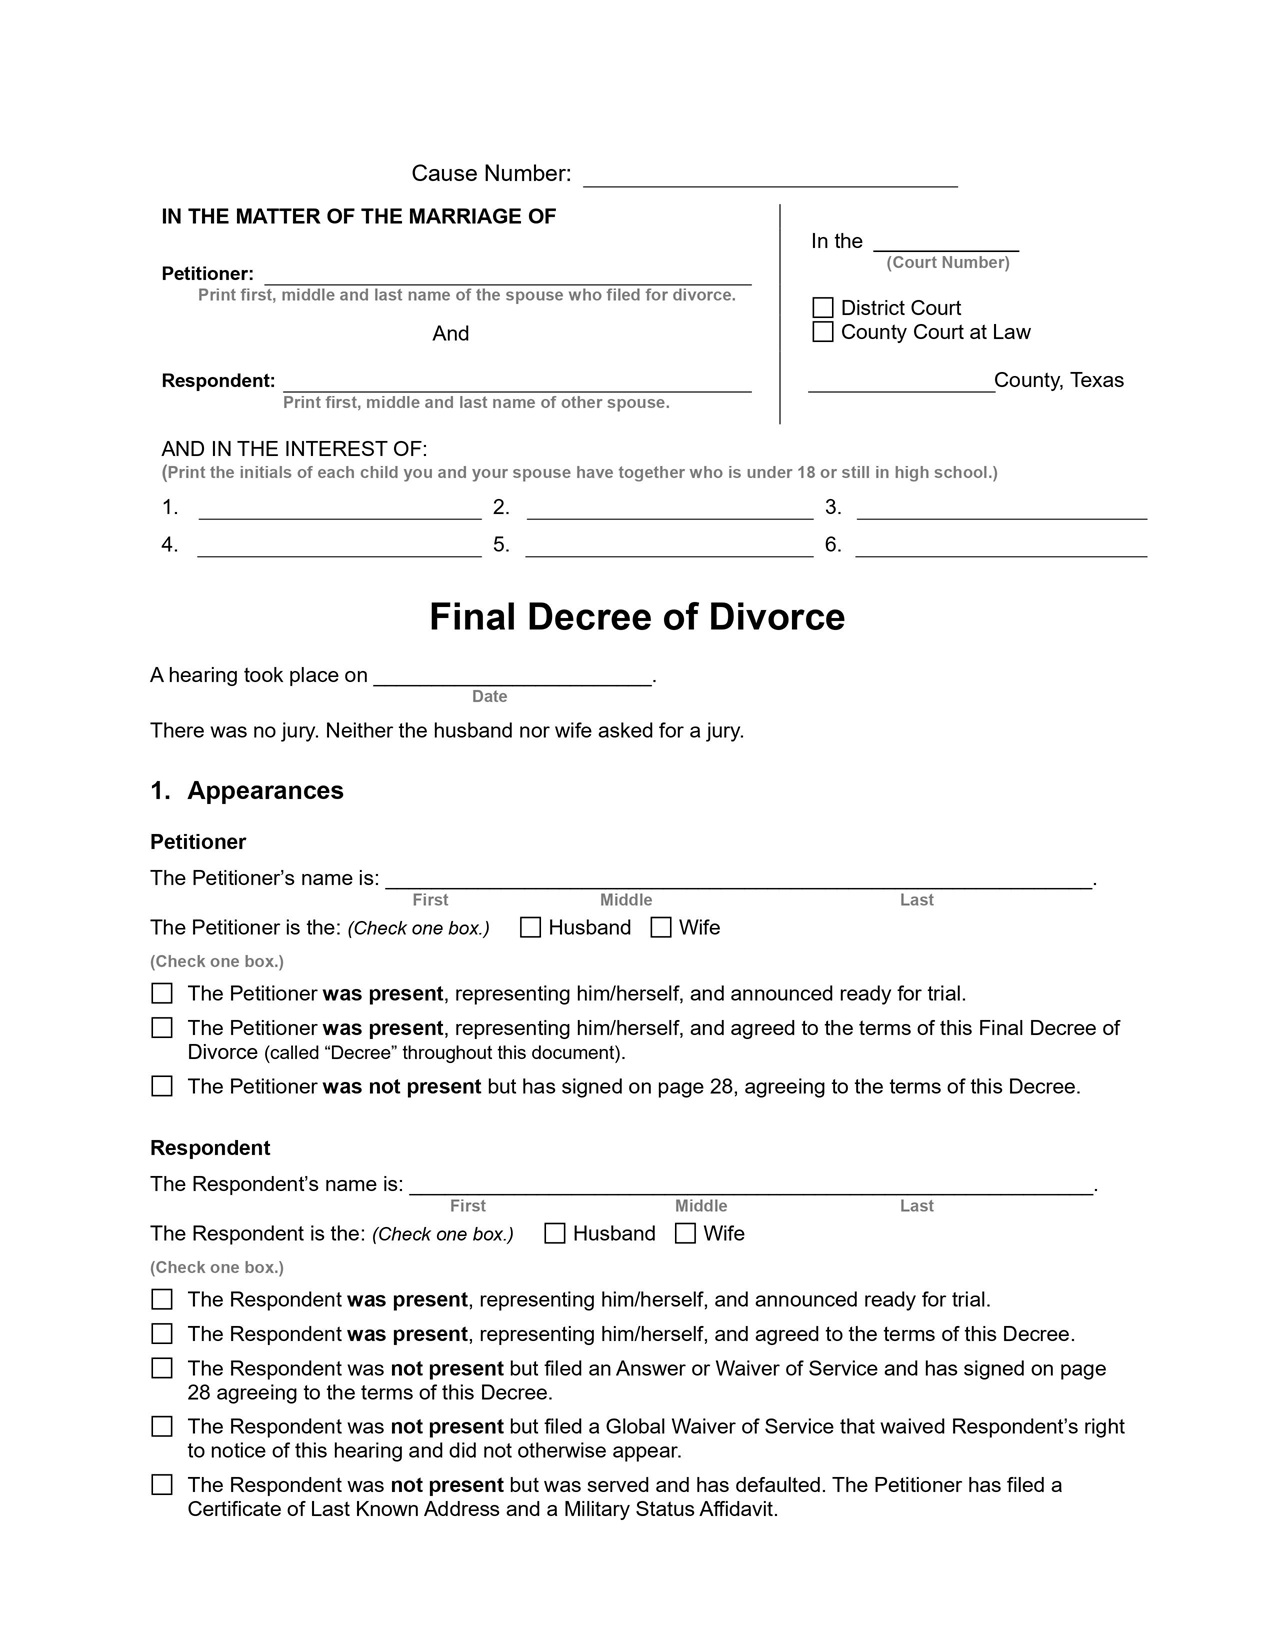 final-decree-of-divorce-form